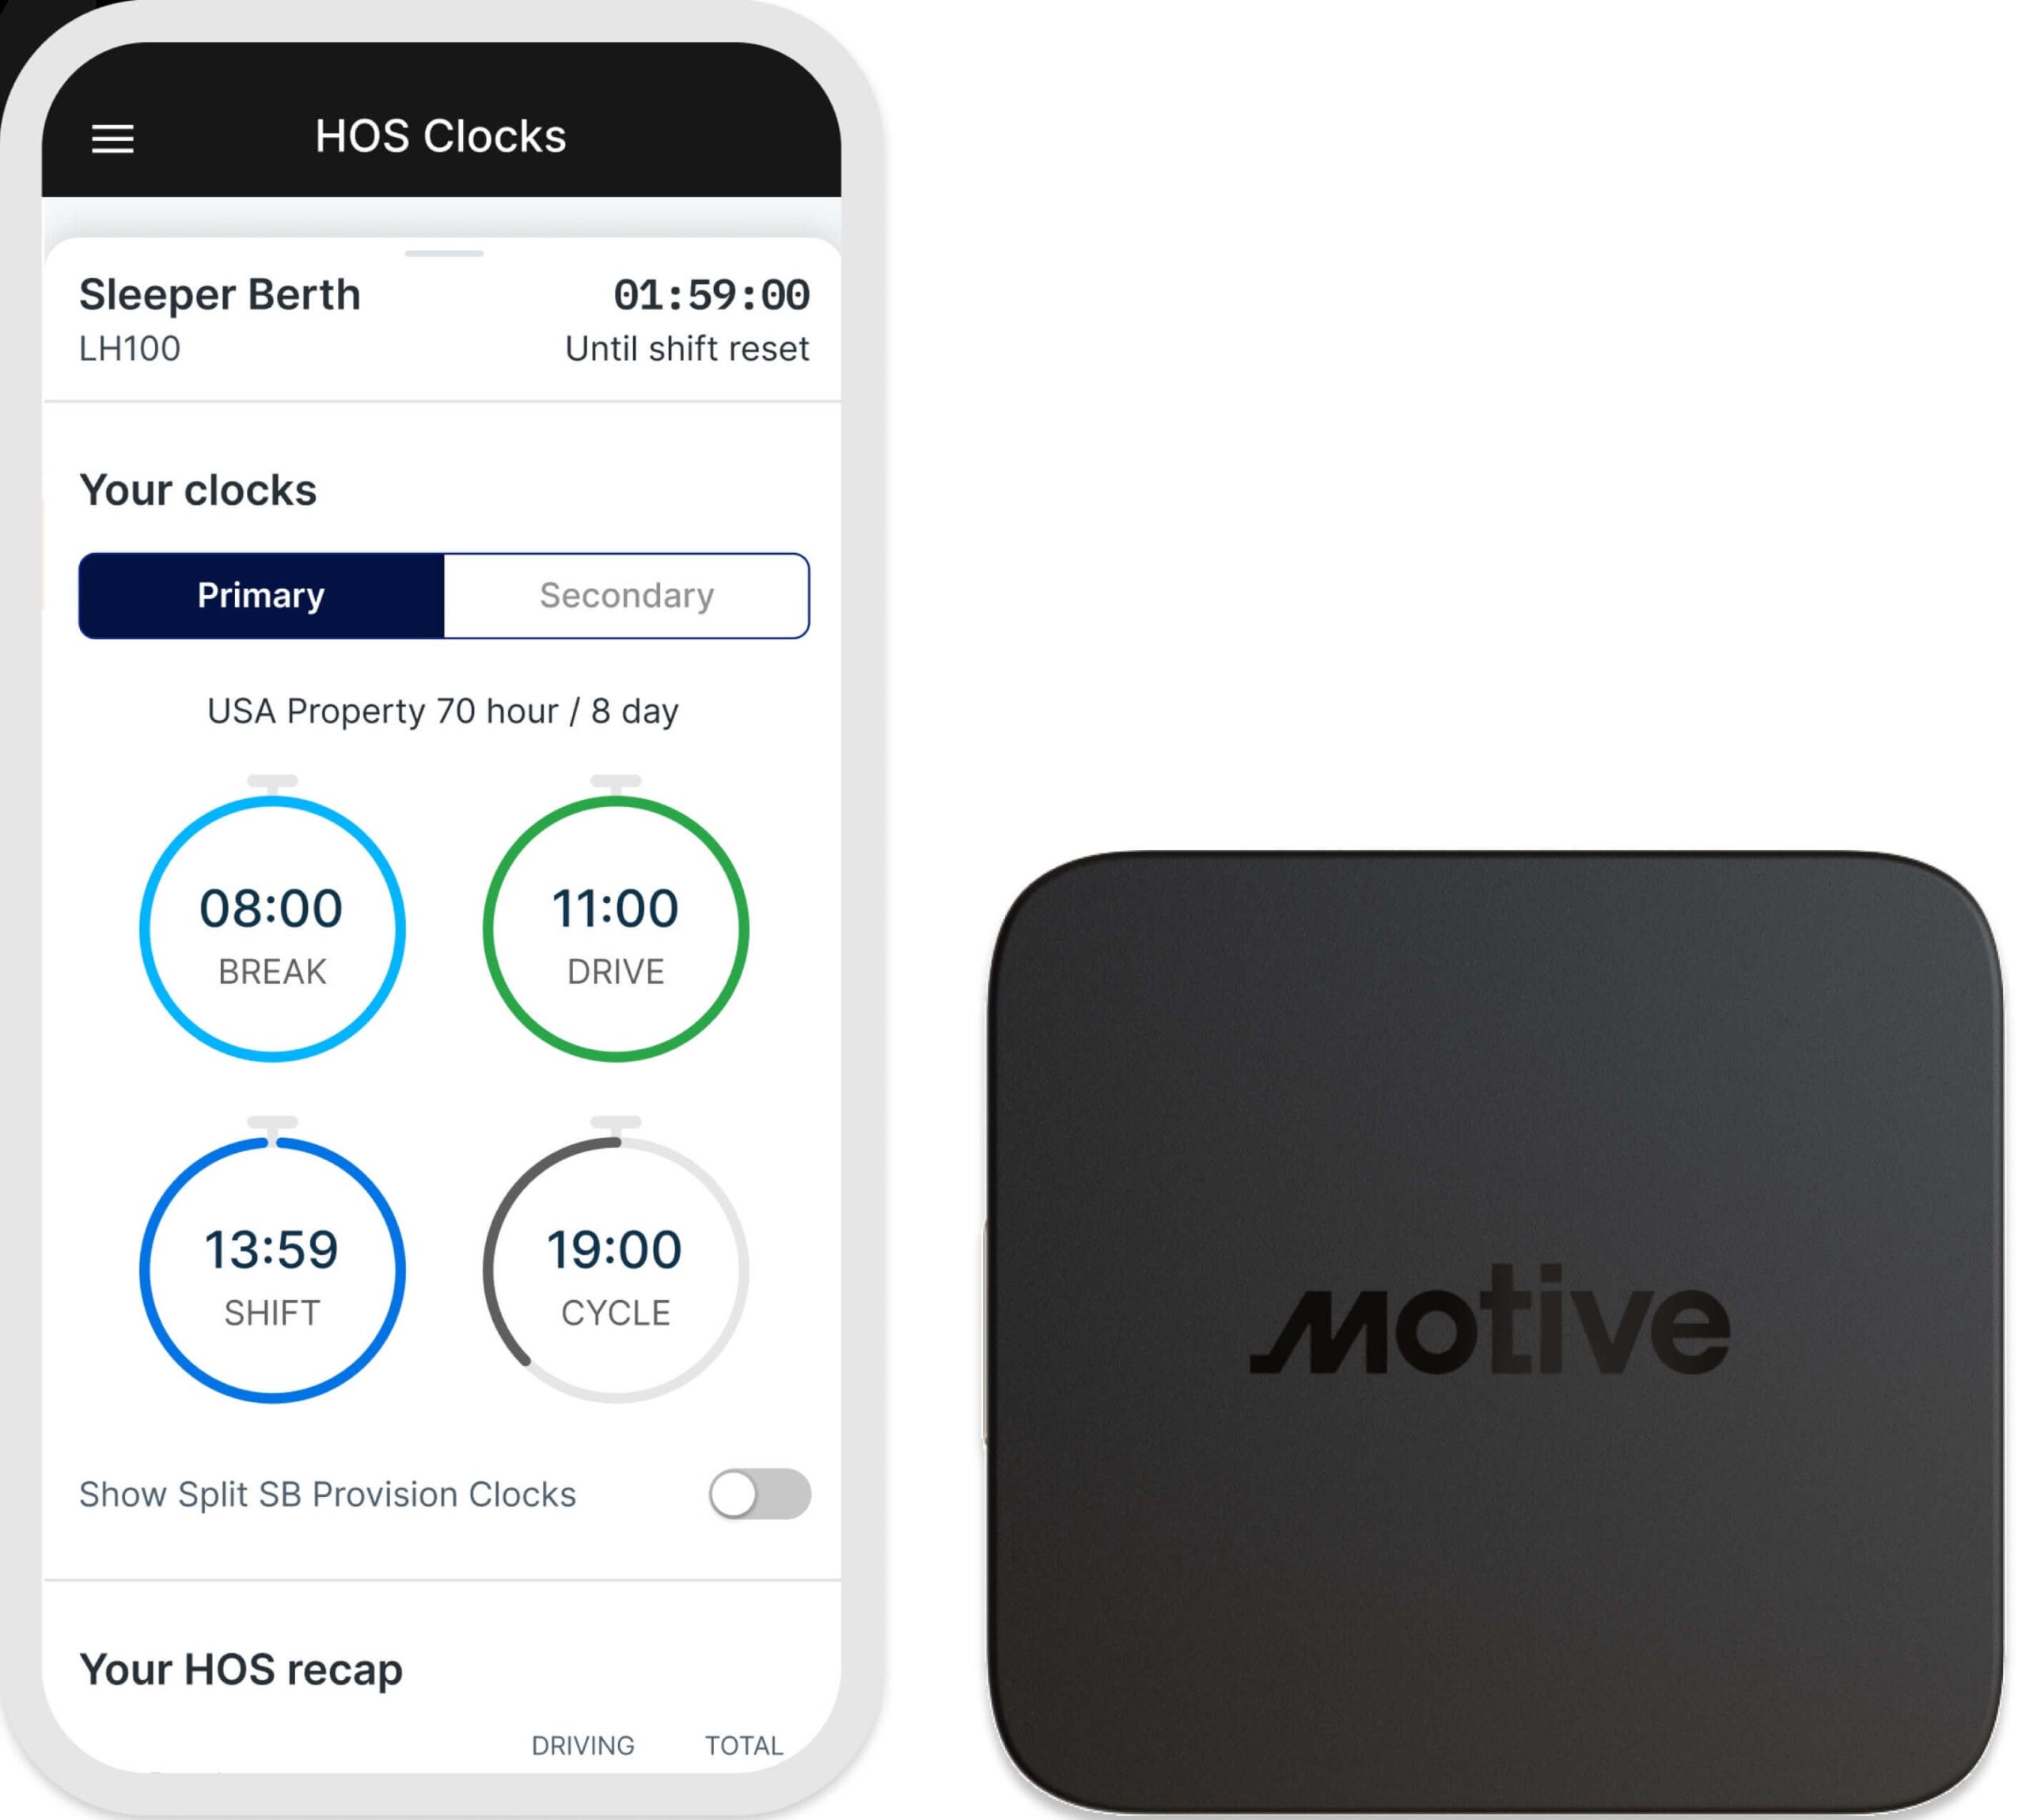 Motive fleet: Mobile and hardware device